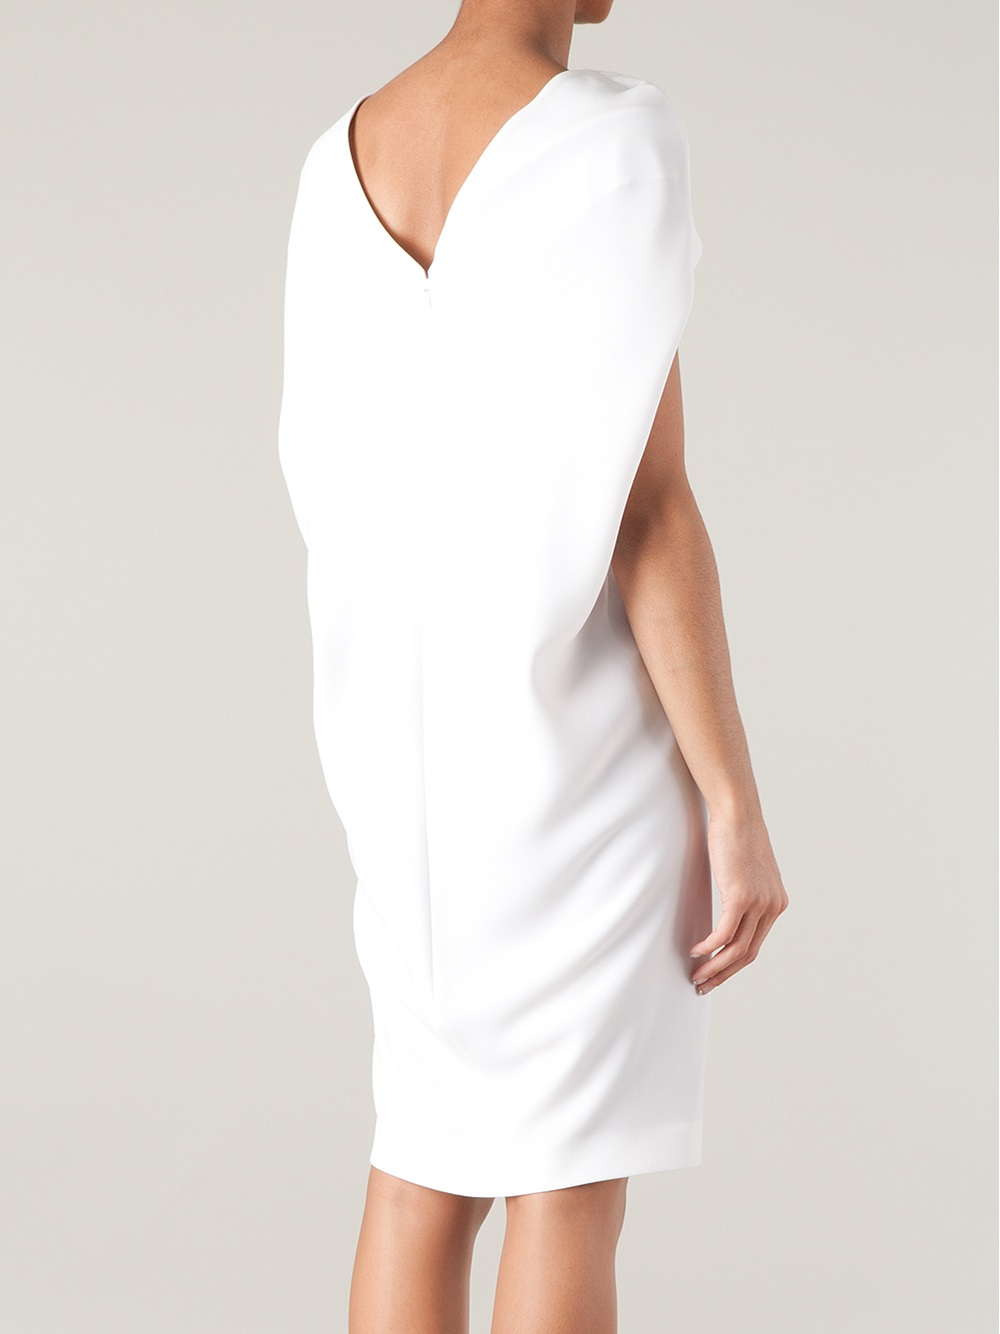 white balenciaga dress off 66% - www.daralnahda.com